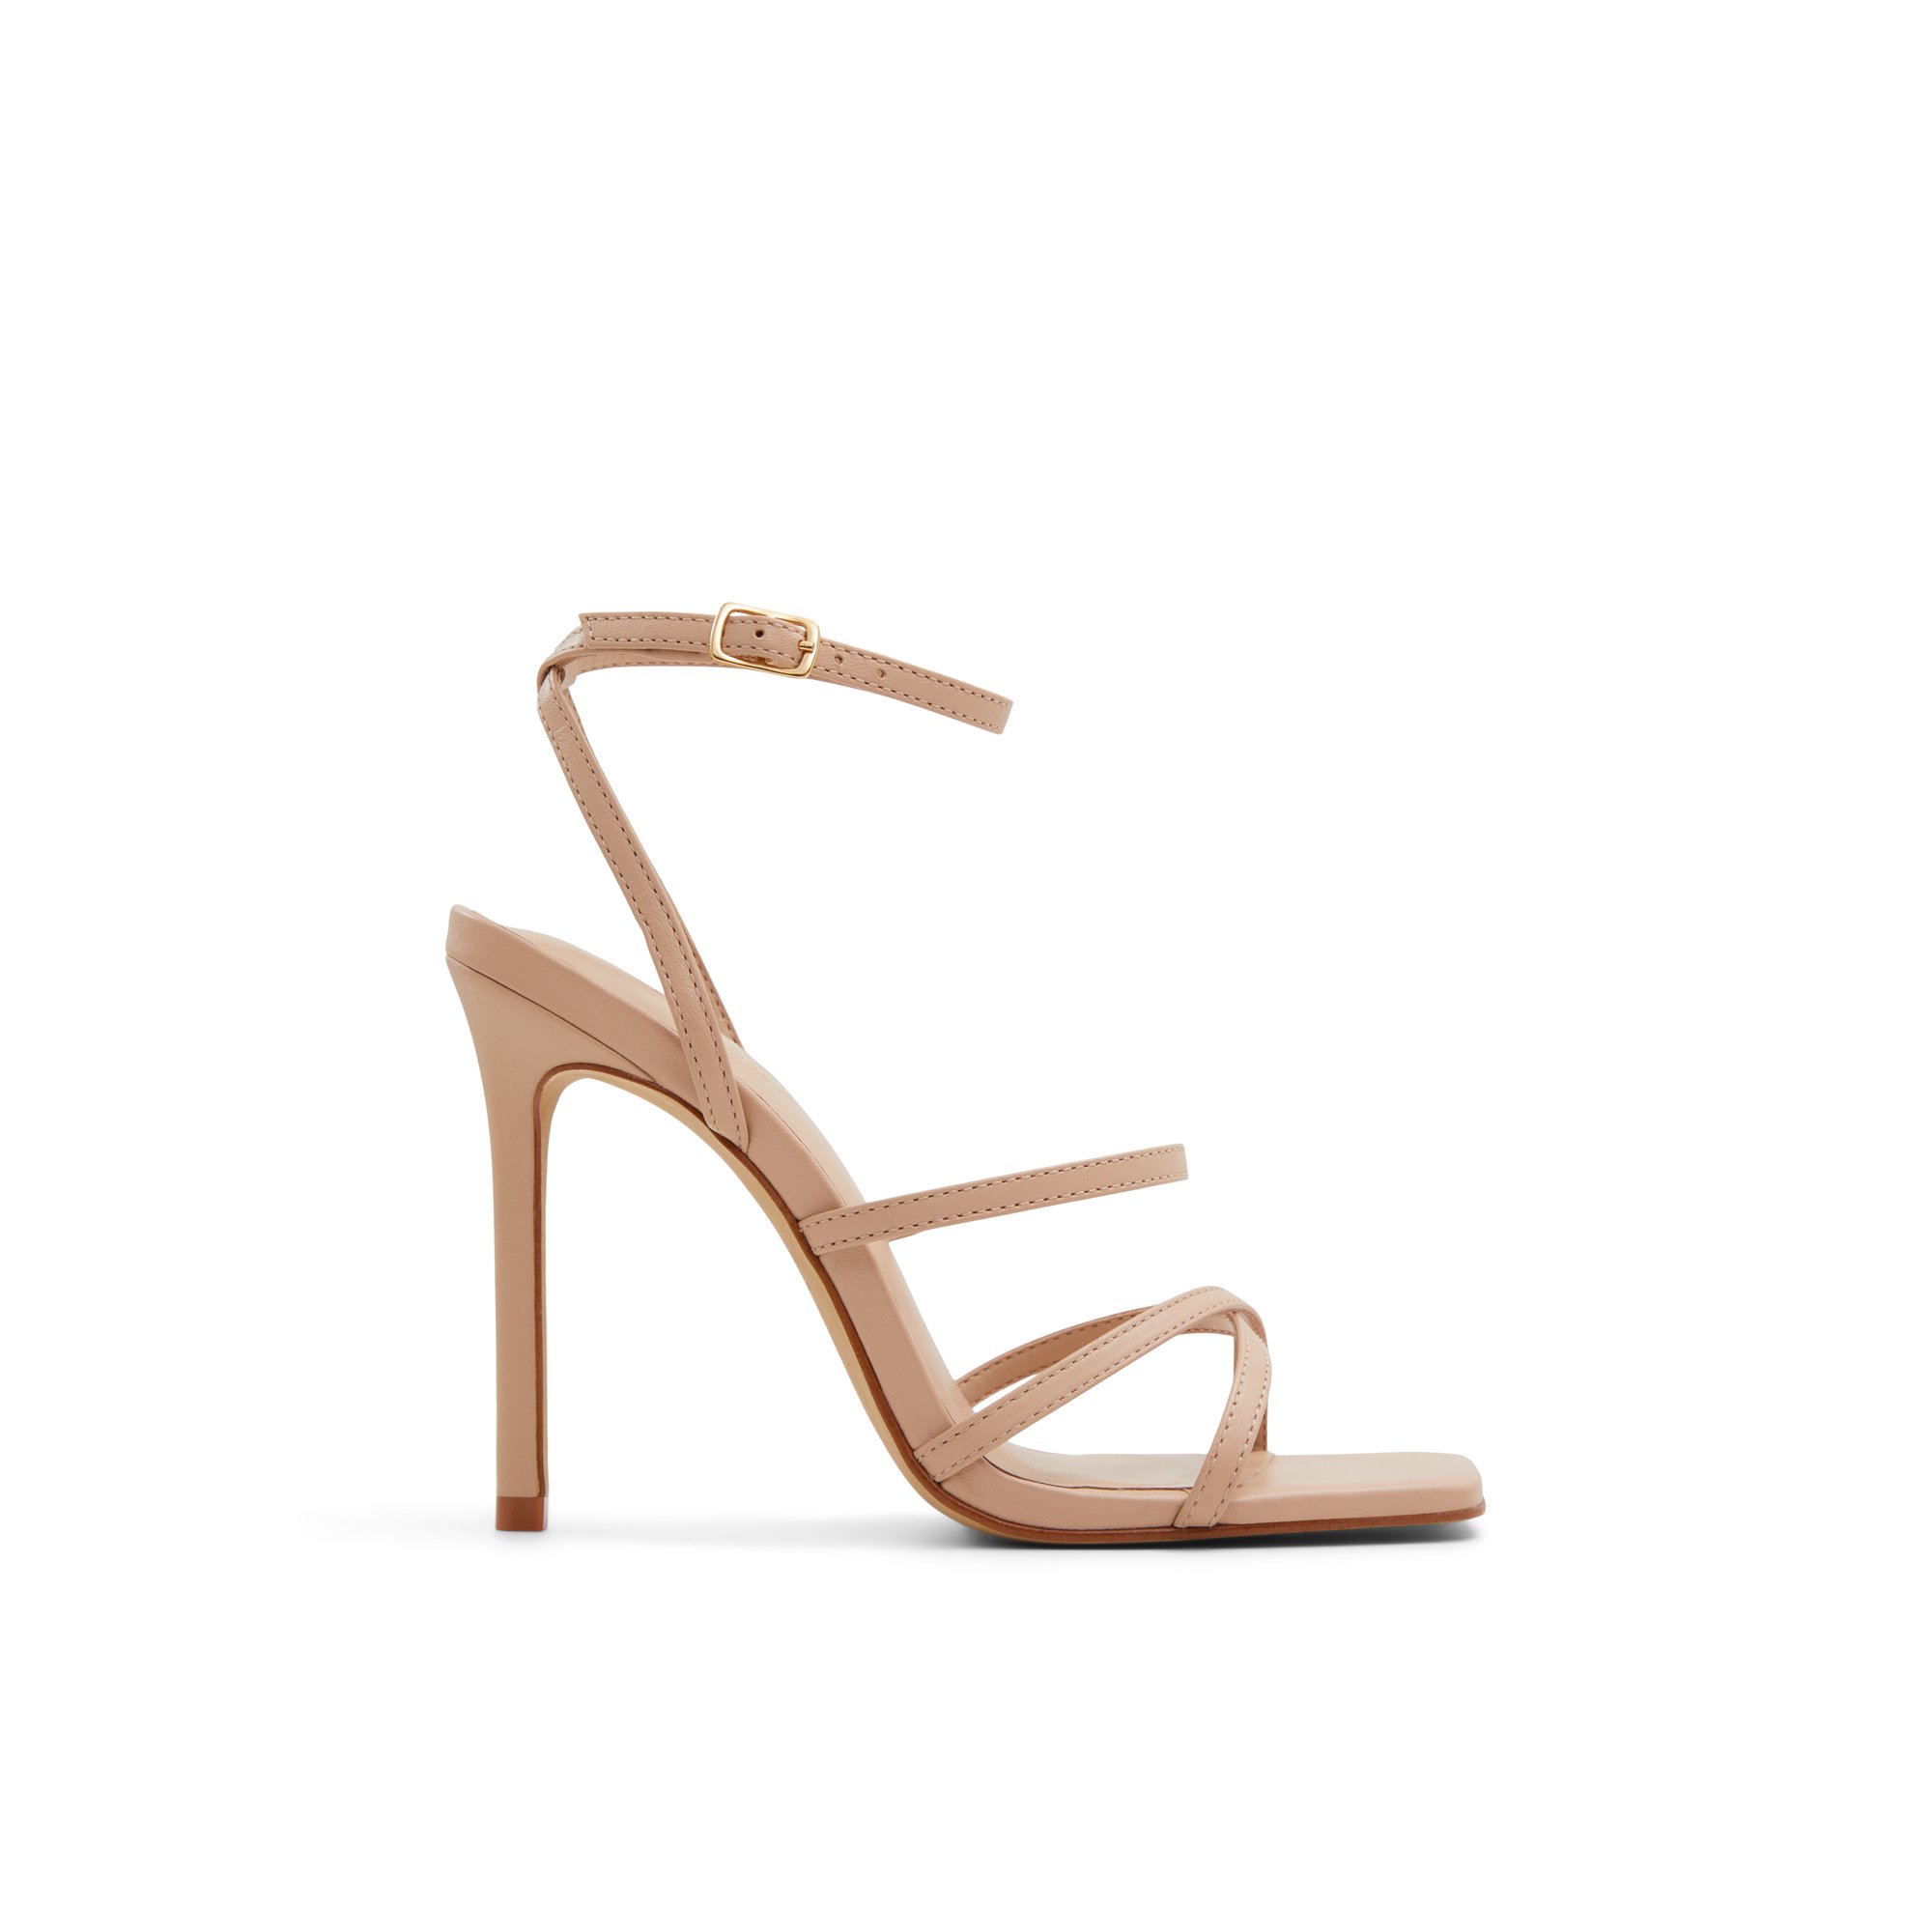 ALDO Galoi - Women's Strappy Sandal Sandals - Beige